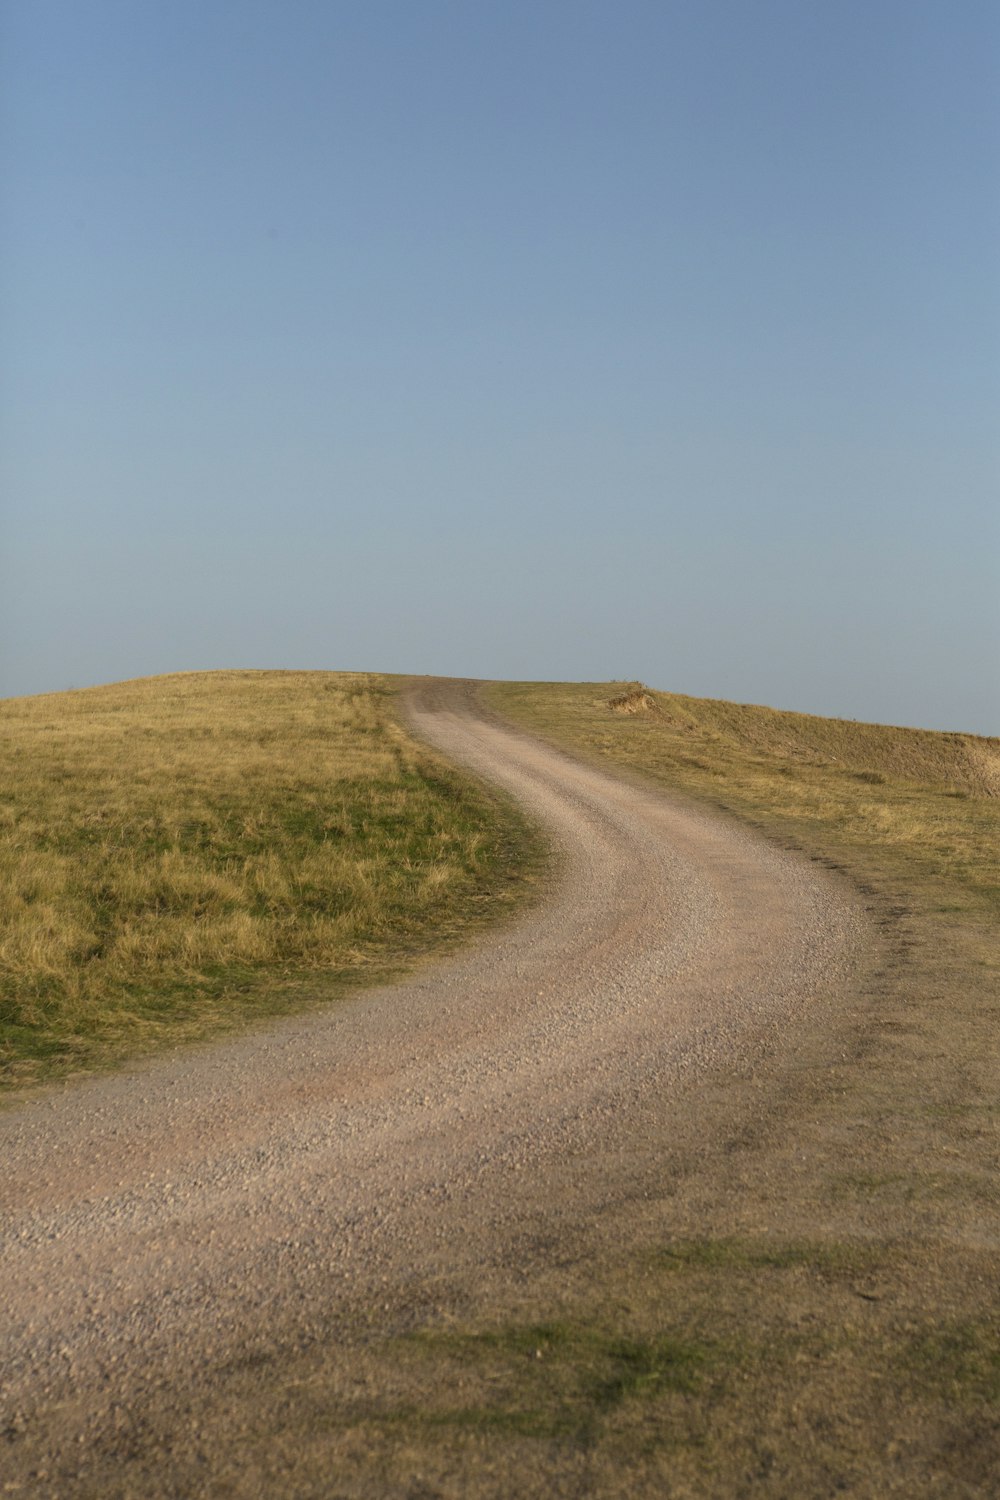 gray dirt road between green grass field under blue sky during daytime